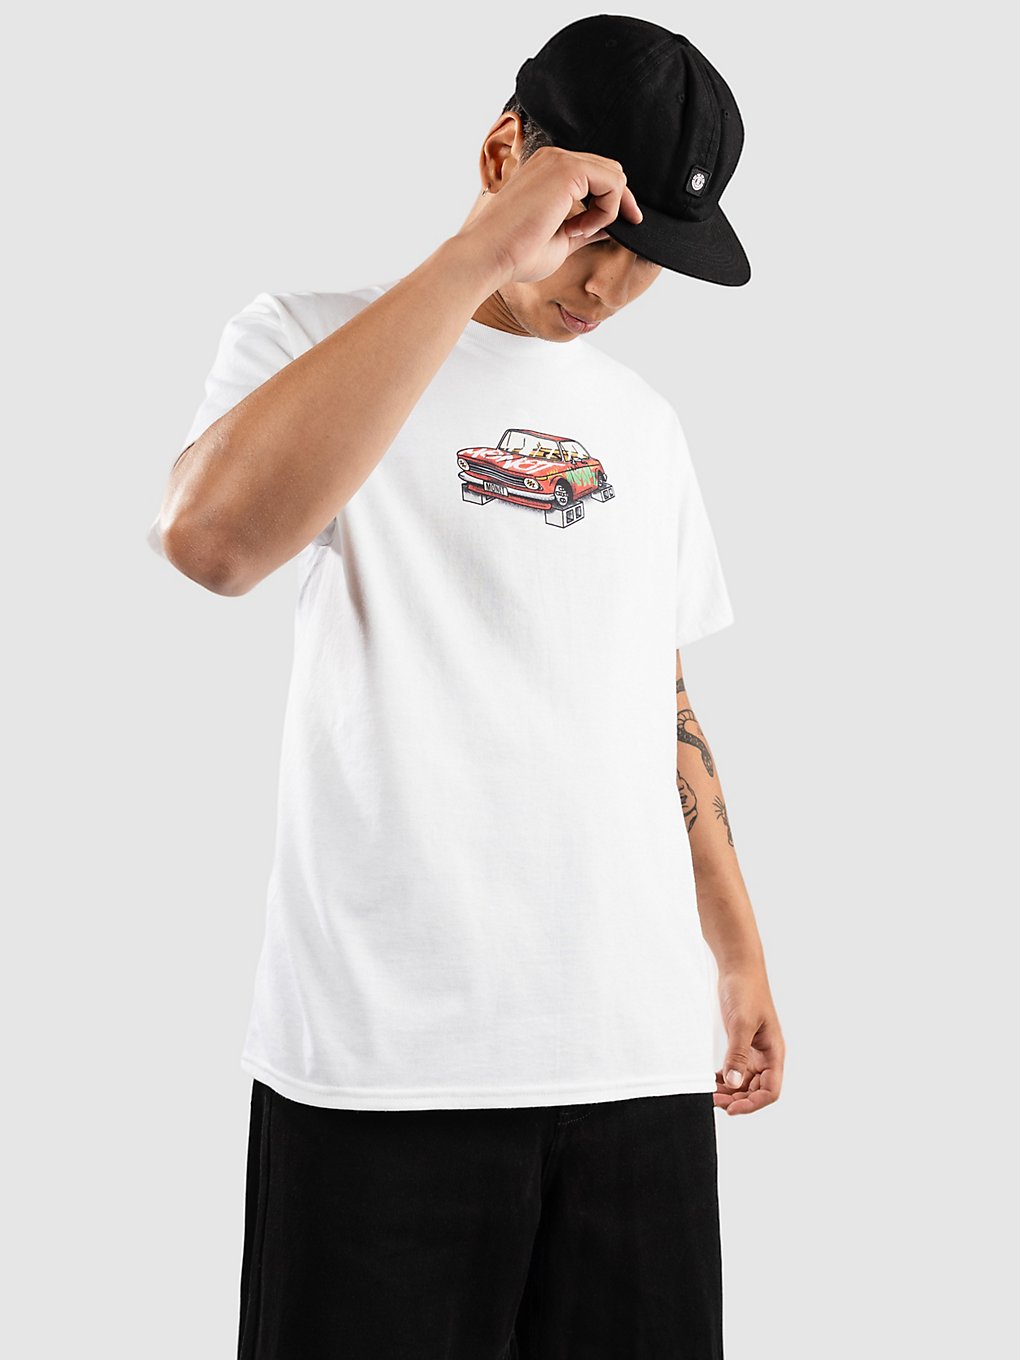 Monet Skateboards Bummer T-Shirt white kaufen